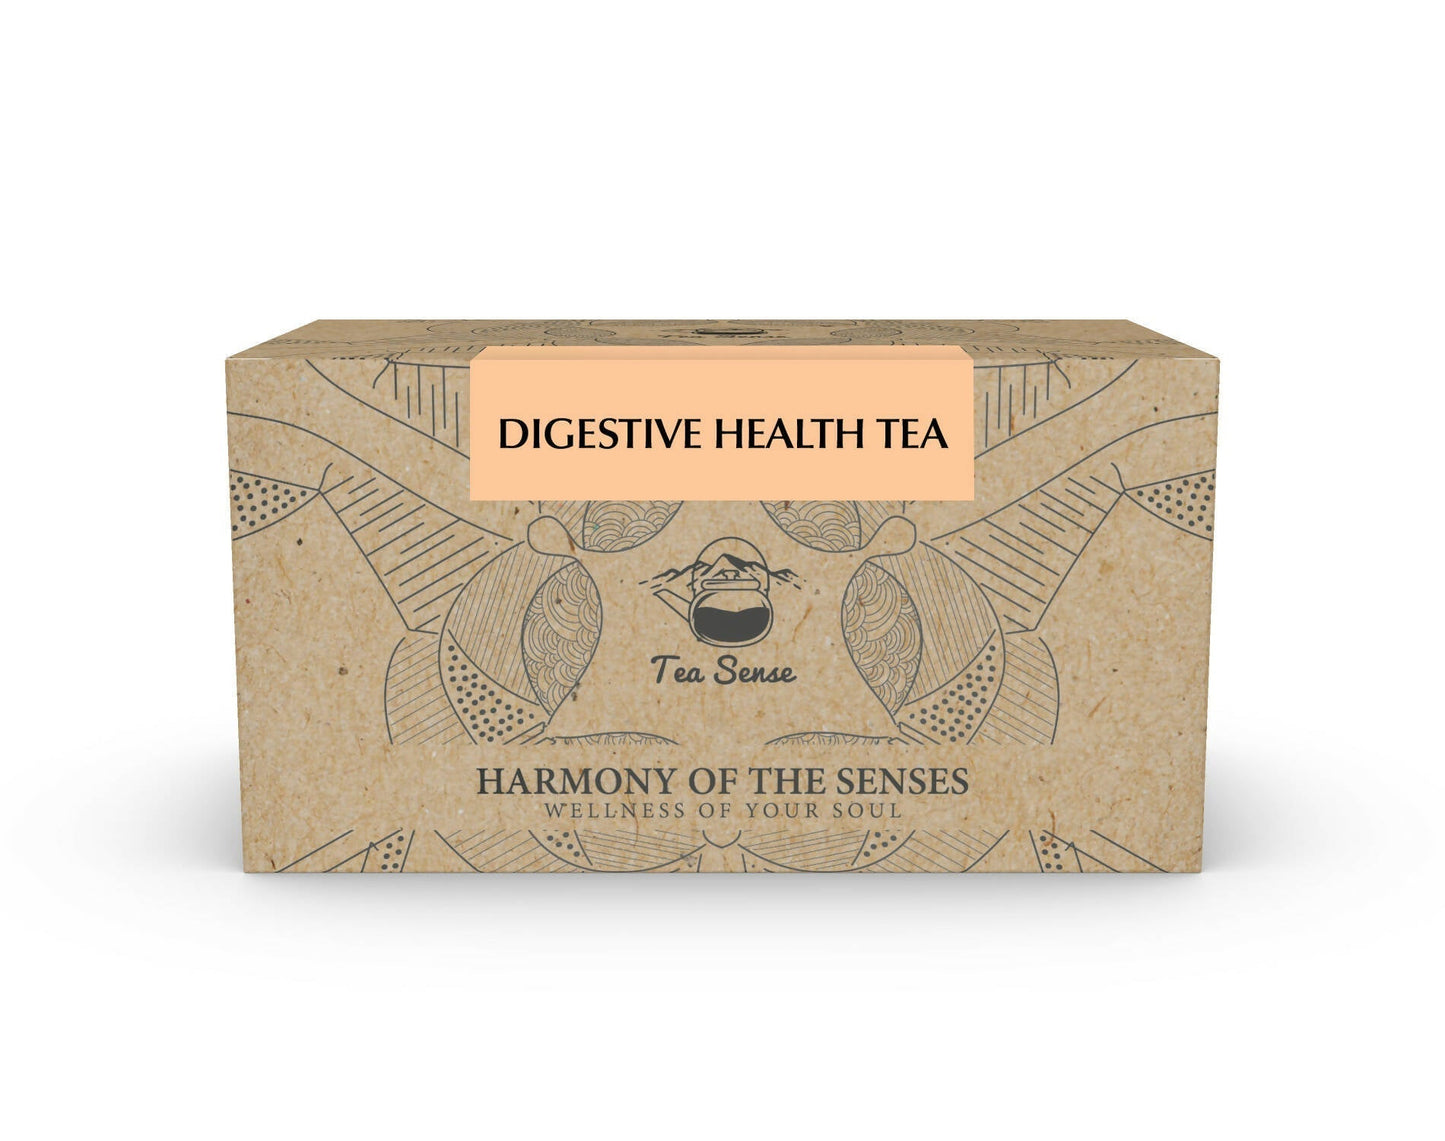 Tea Sense Digestive Health Tea Bags Box - buy in USA, Australia, Canada